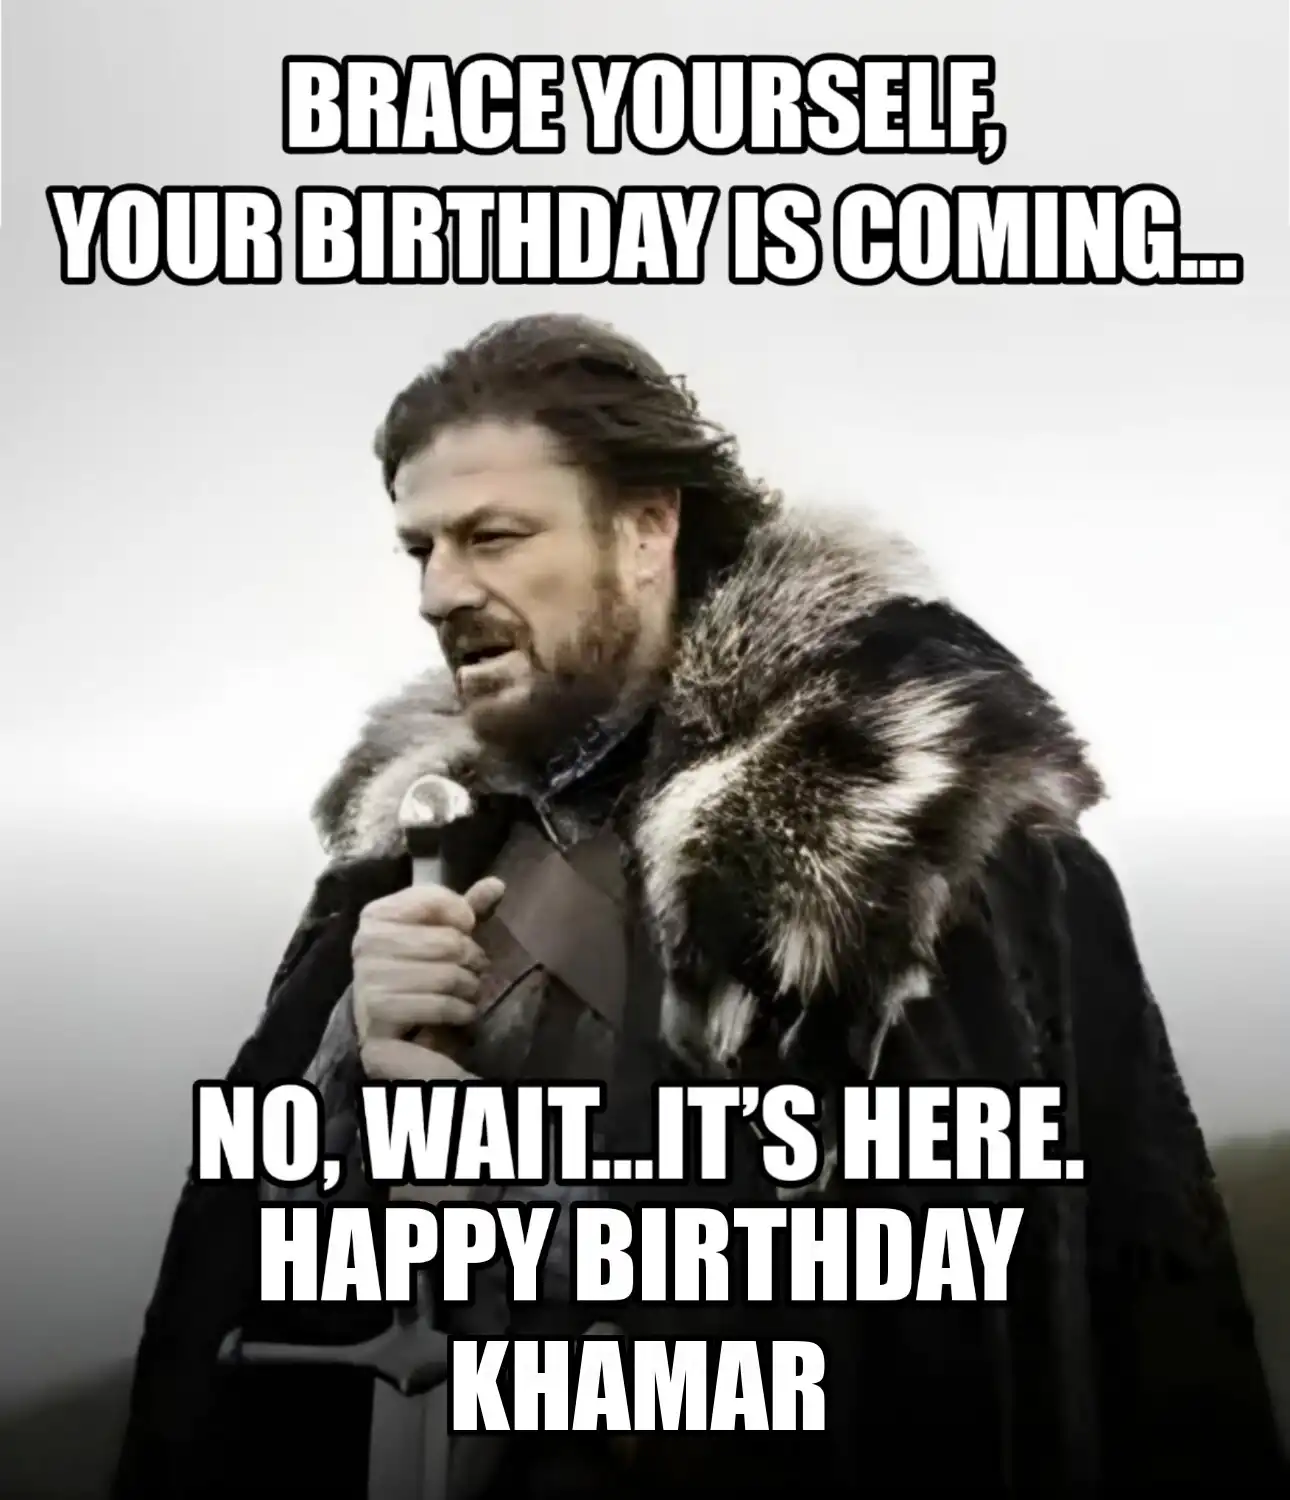 Happy Birthday Khamar Brace Yourself Your Birthday Is Coming Meme